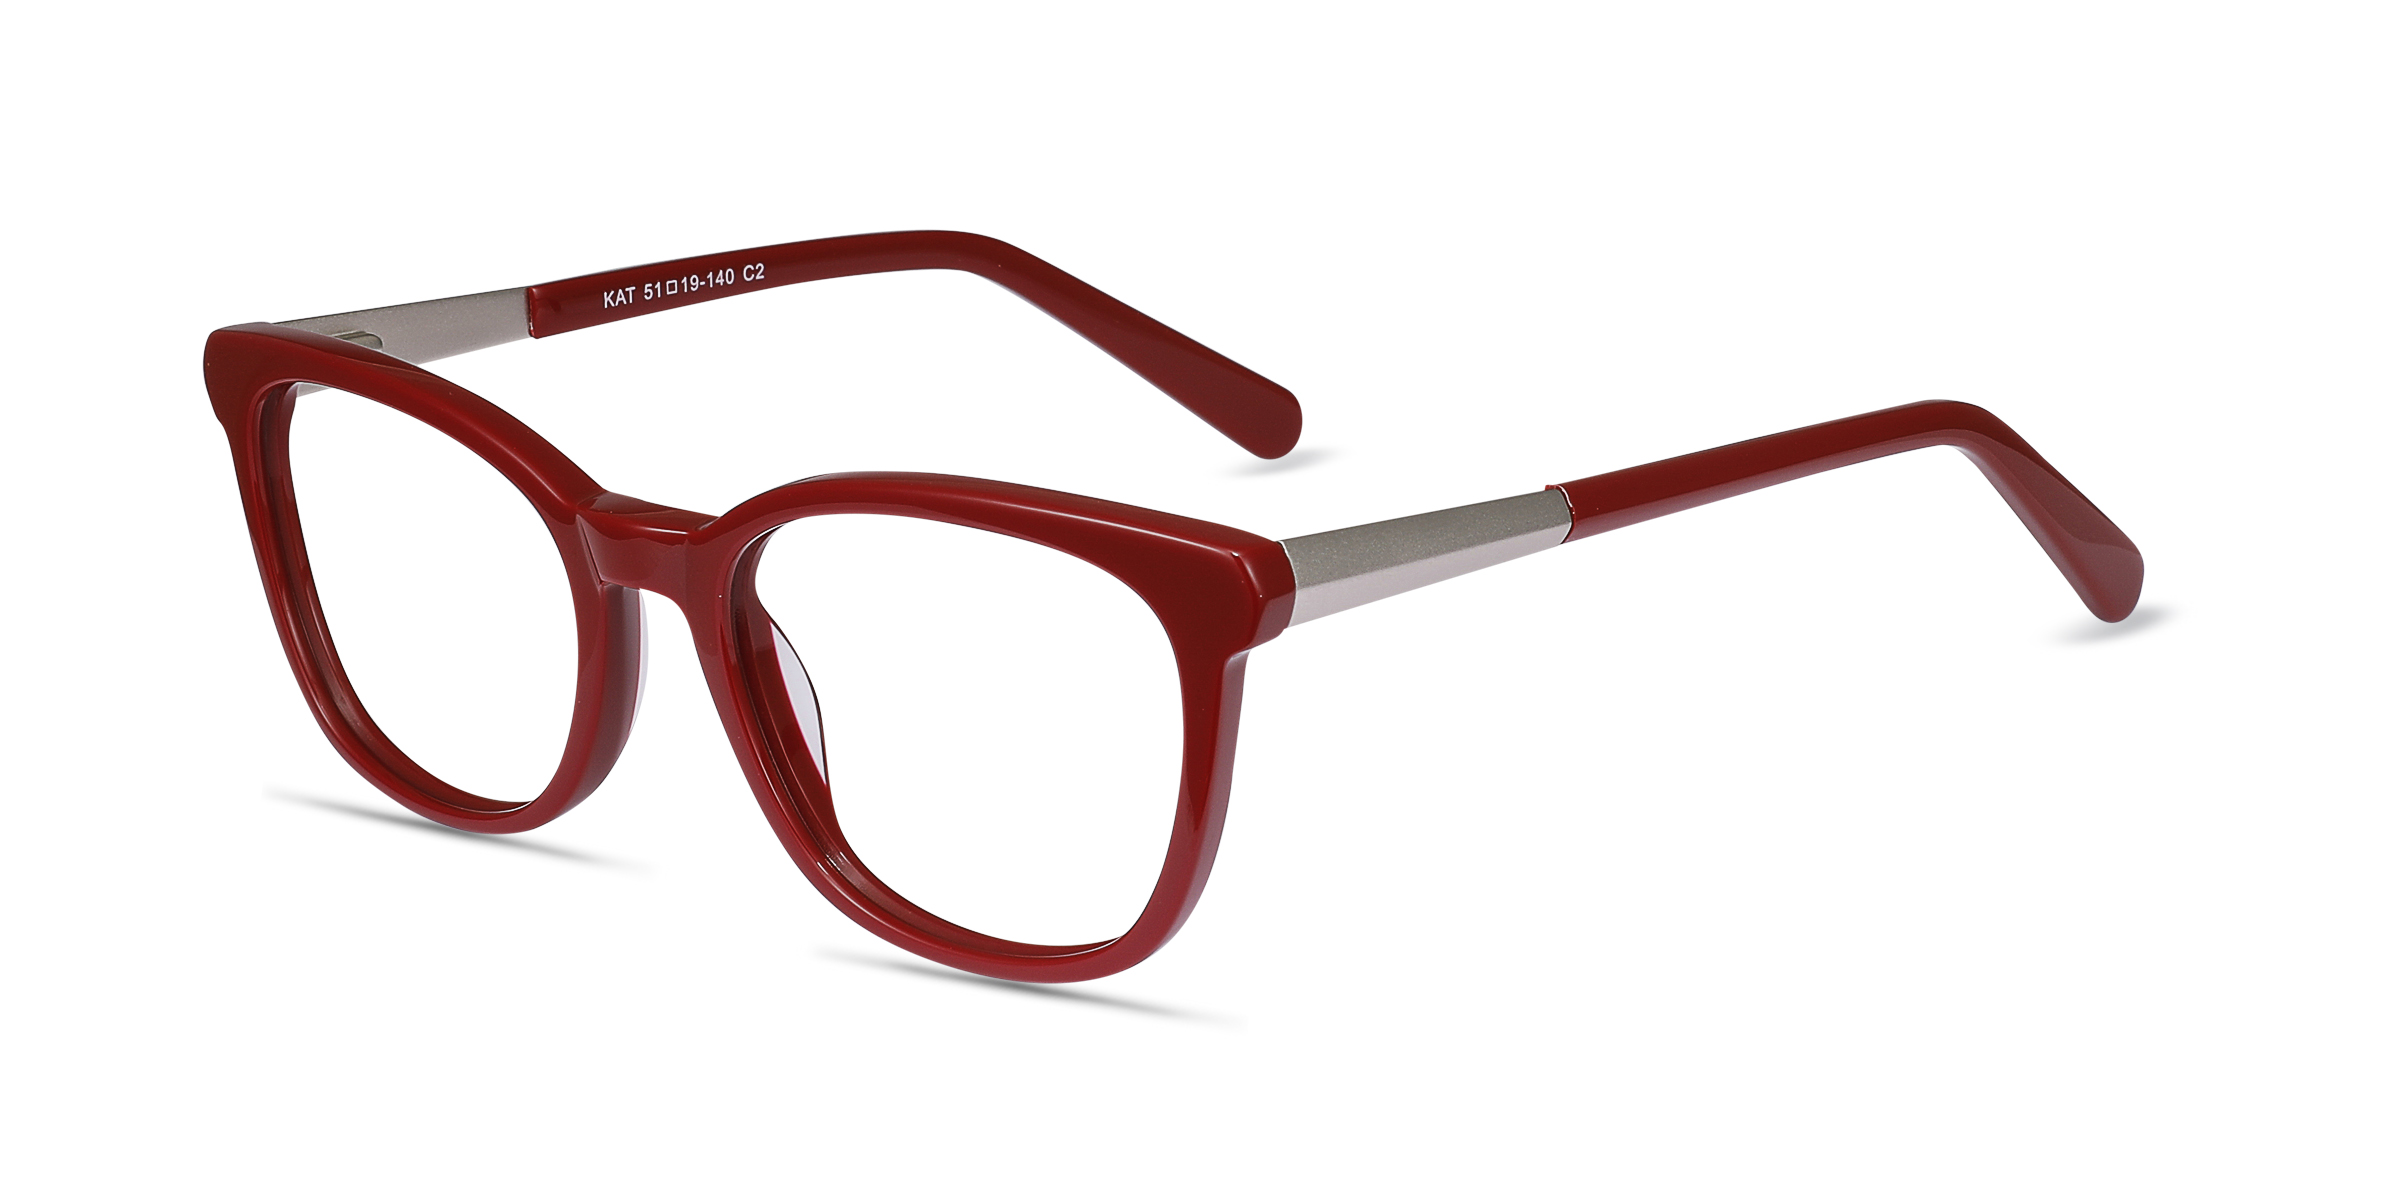 Kat Square Burgundy Glasses for Women | Eyebuydirect